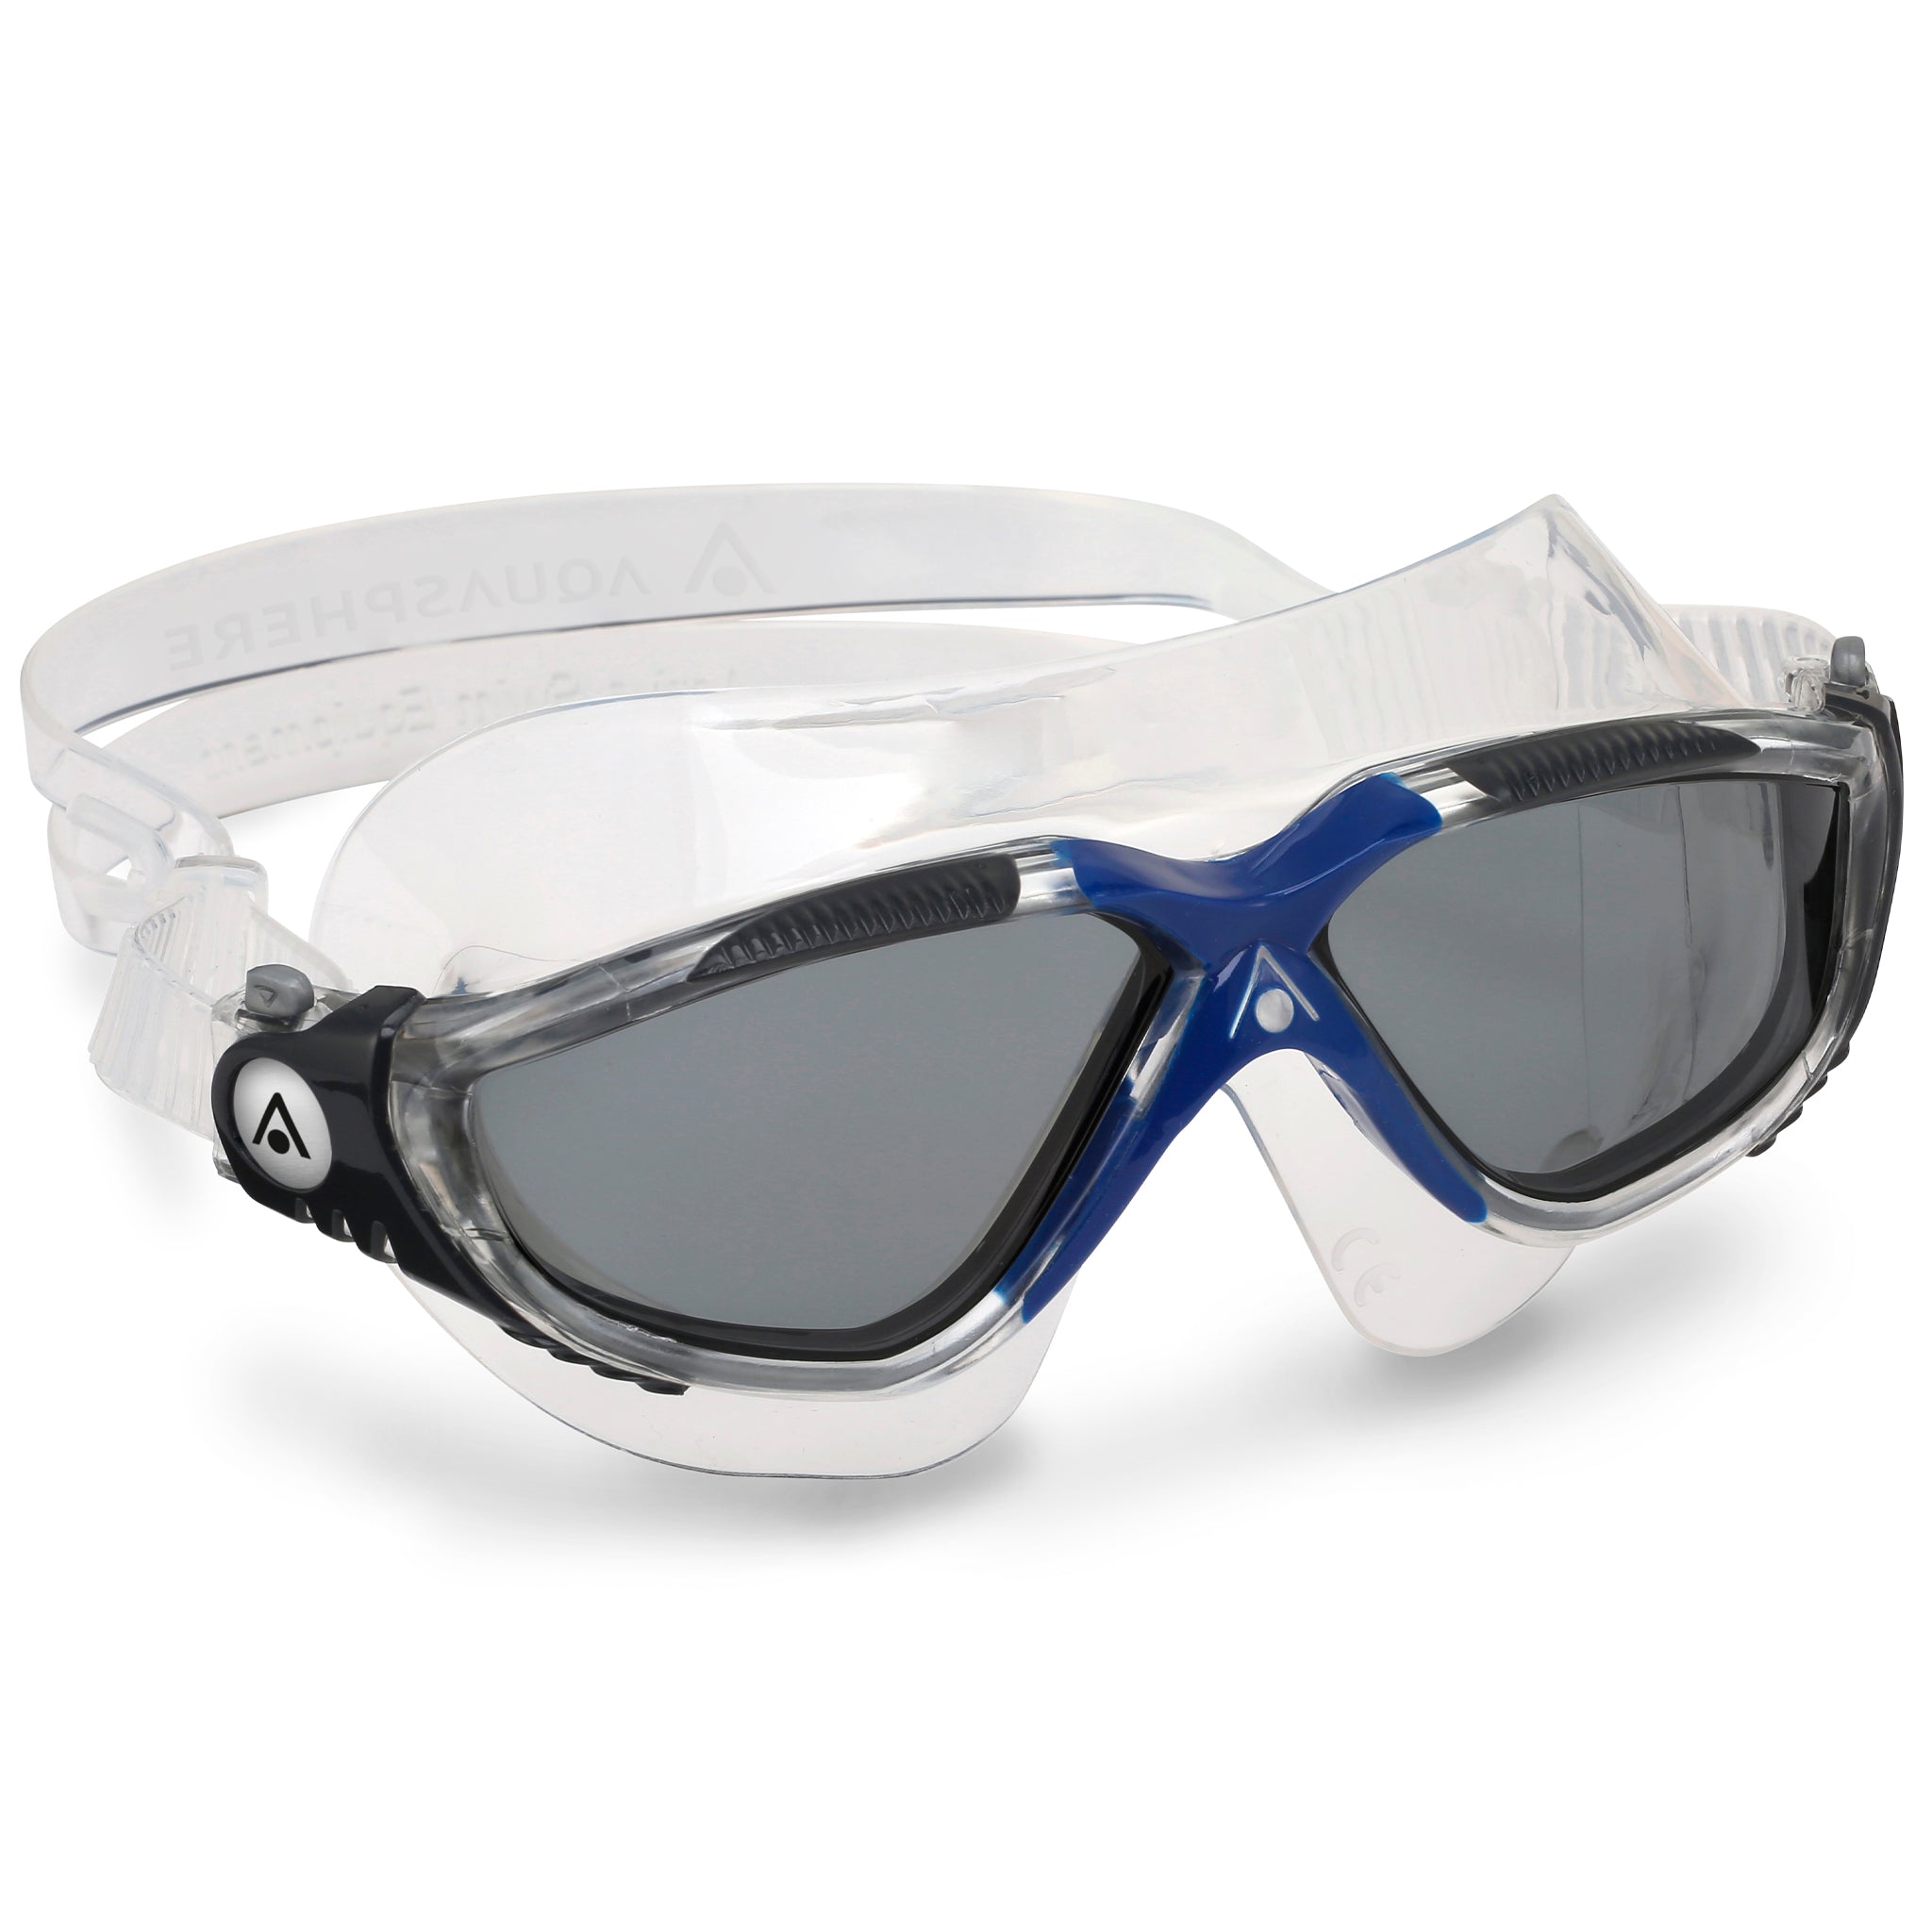 Aquasphere Vista Swimming Goggles Mask Smoke Tinted Lenses | Transparent/Dark Grey